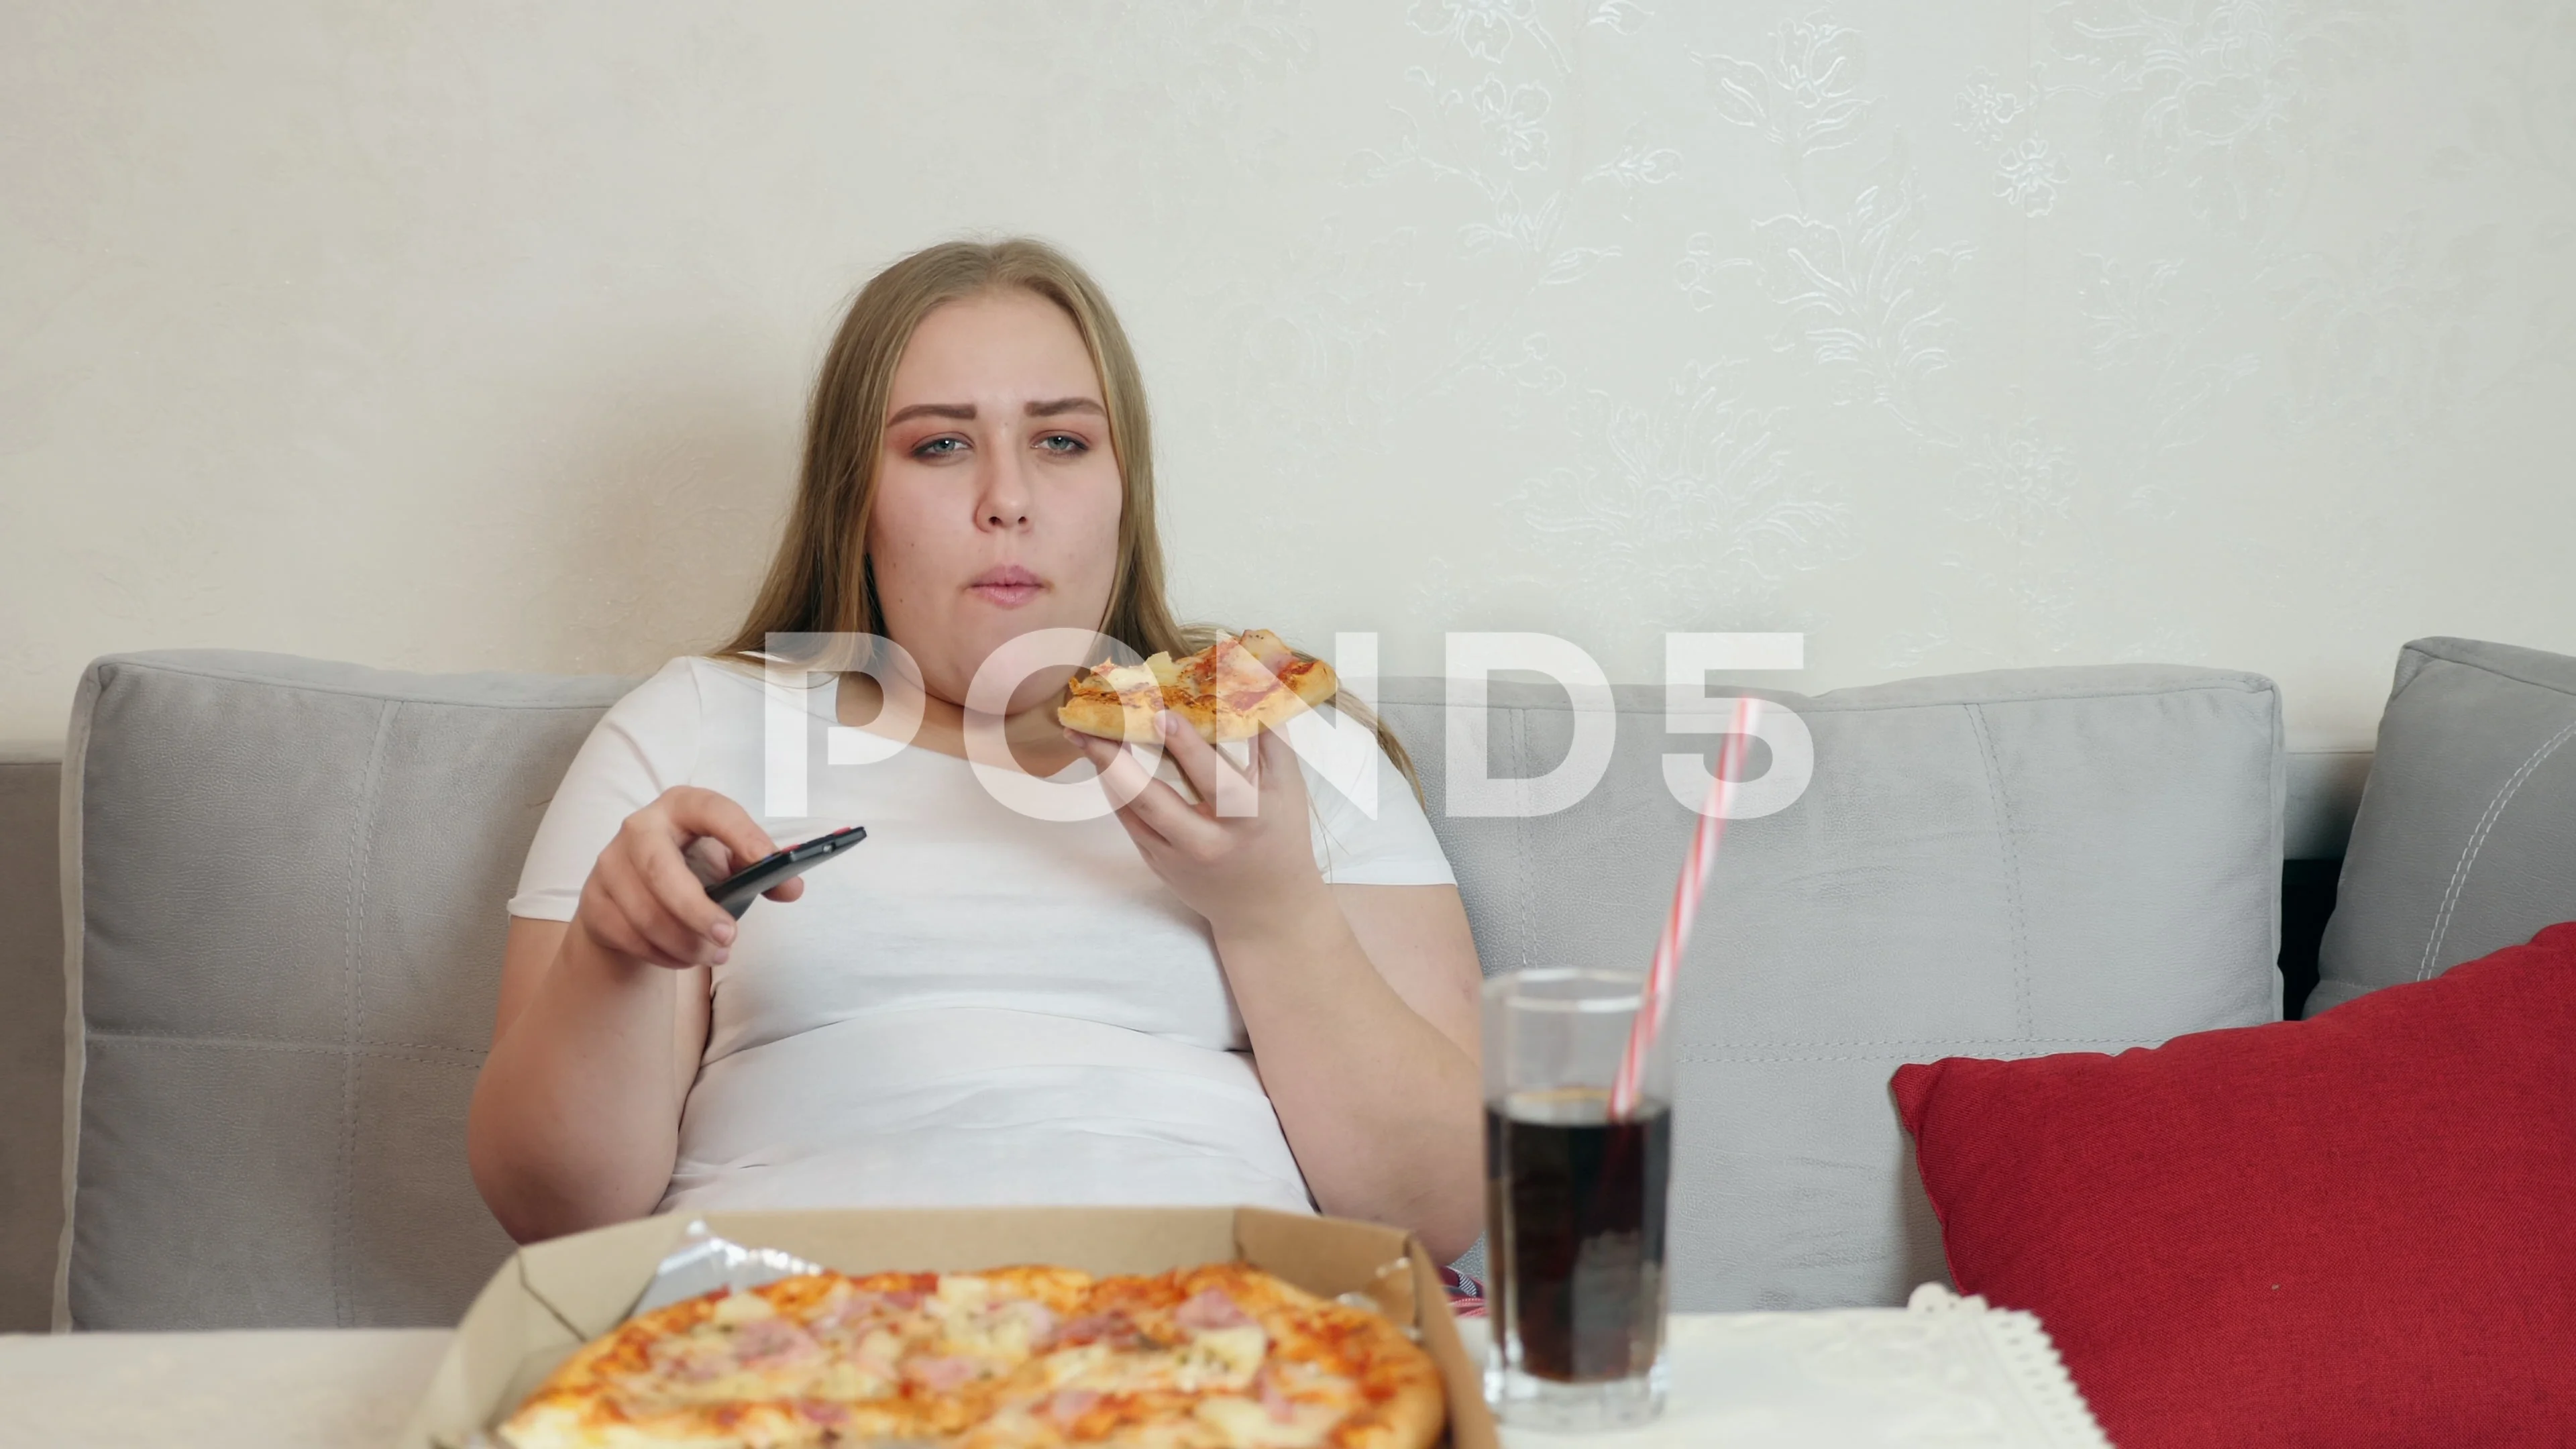 avram anca share fat lady eating pizza photos